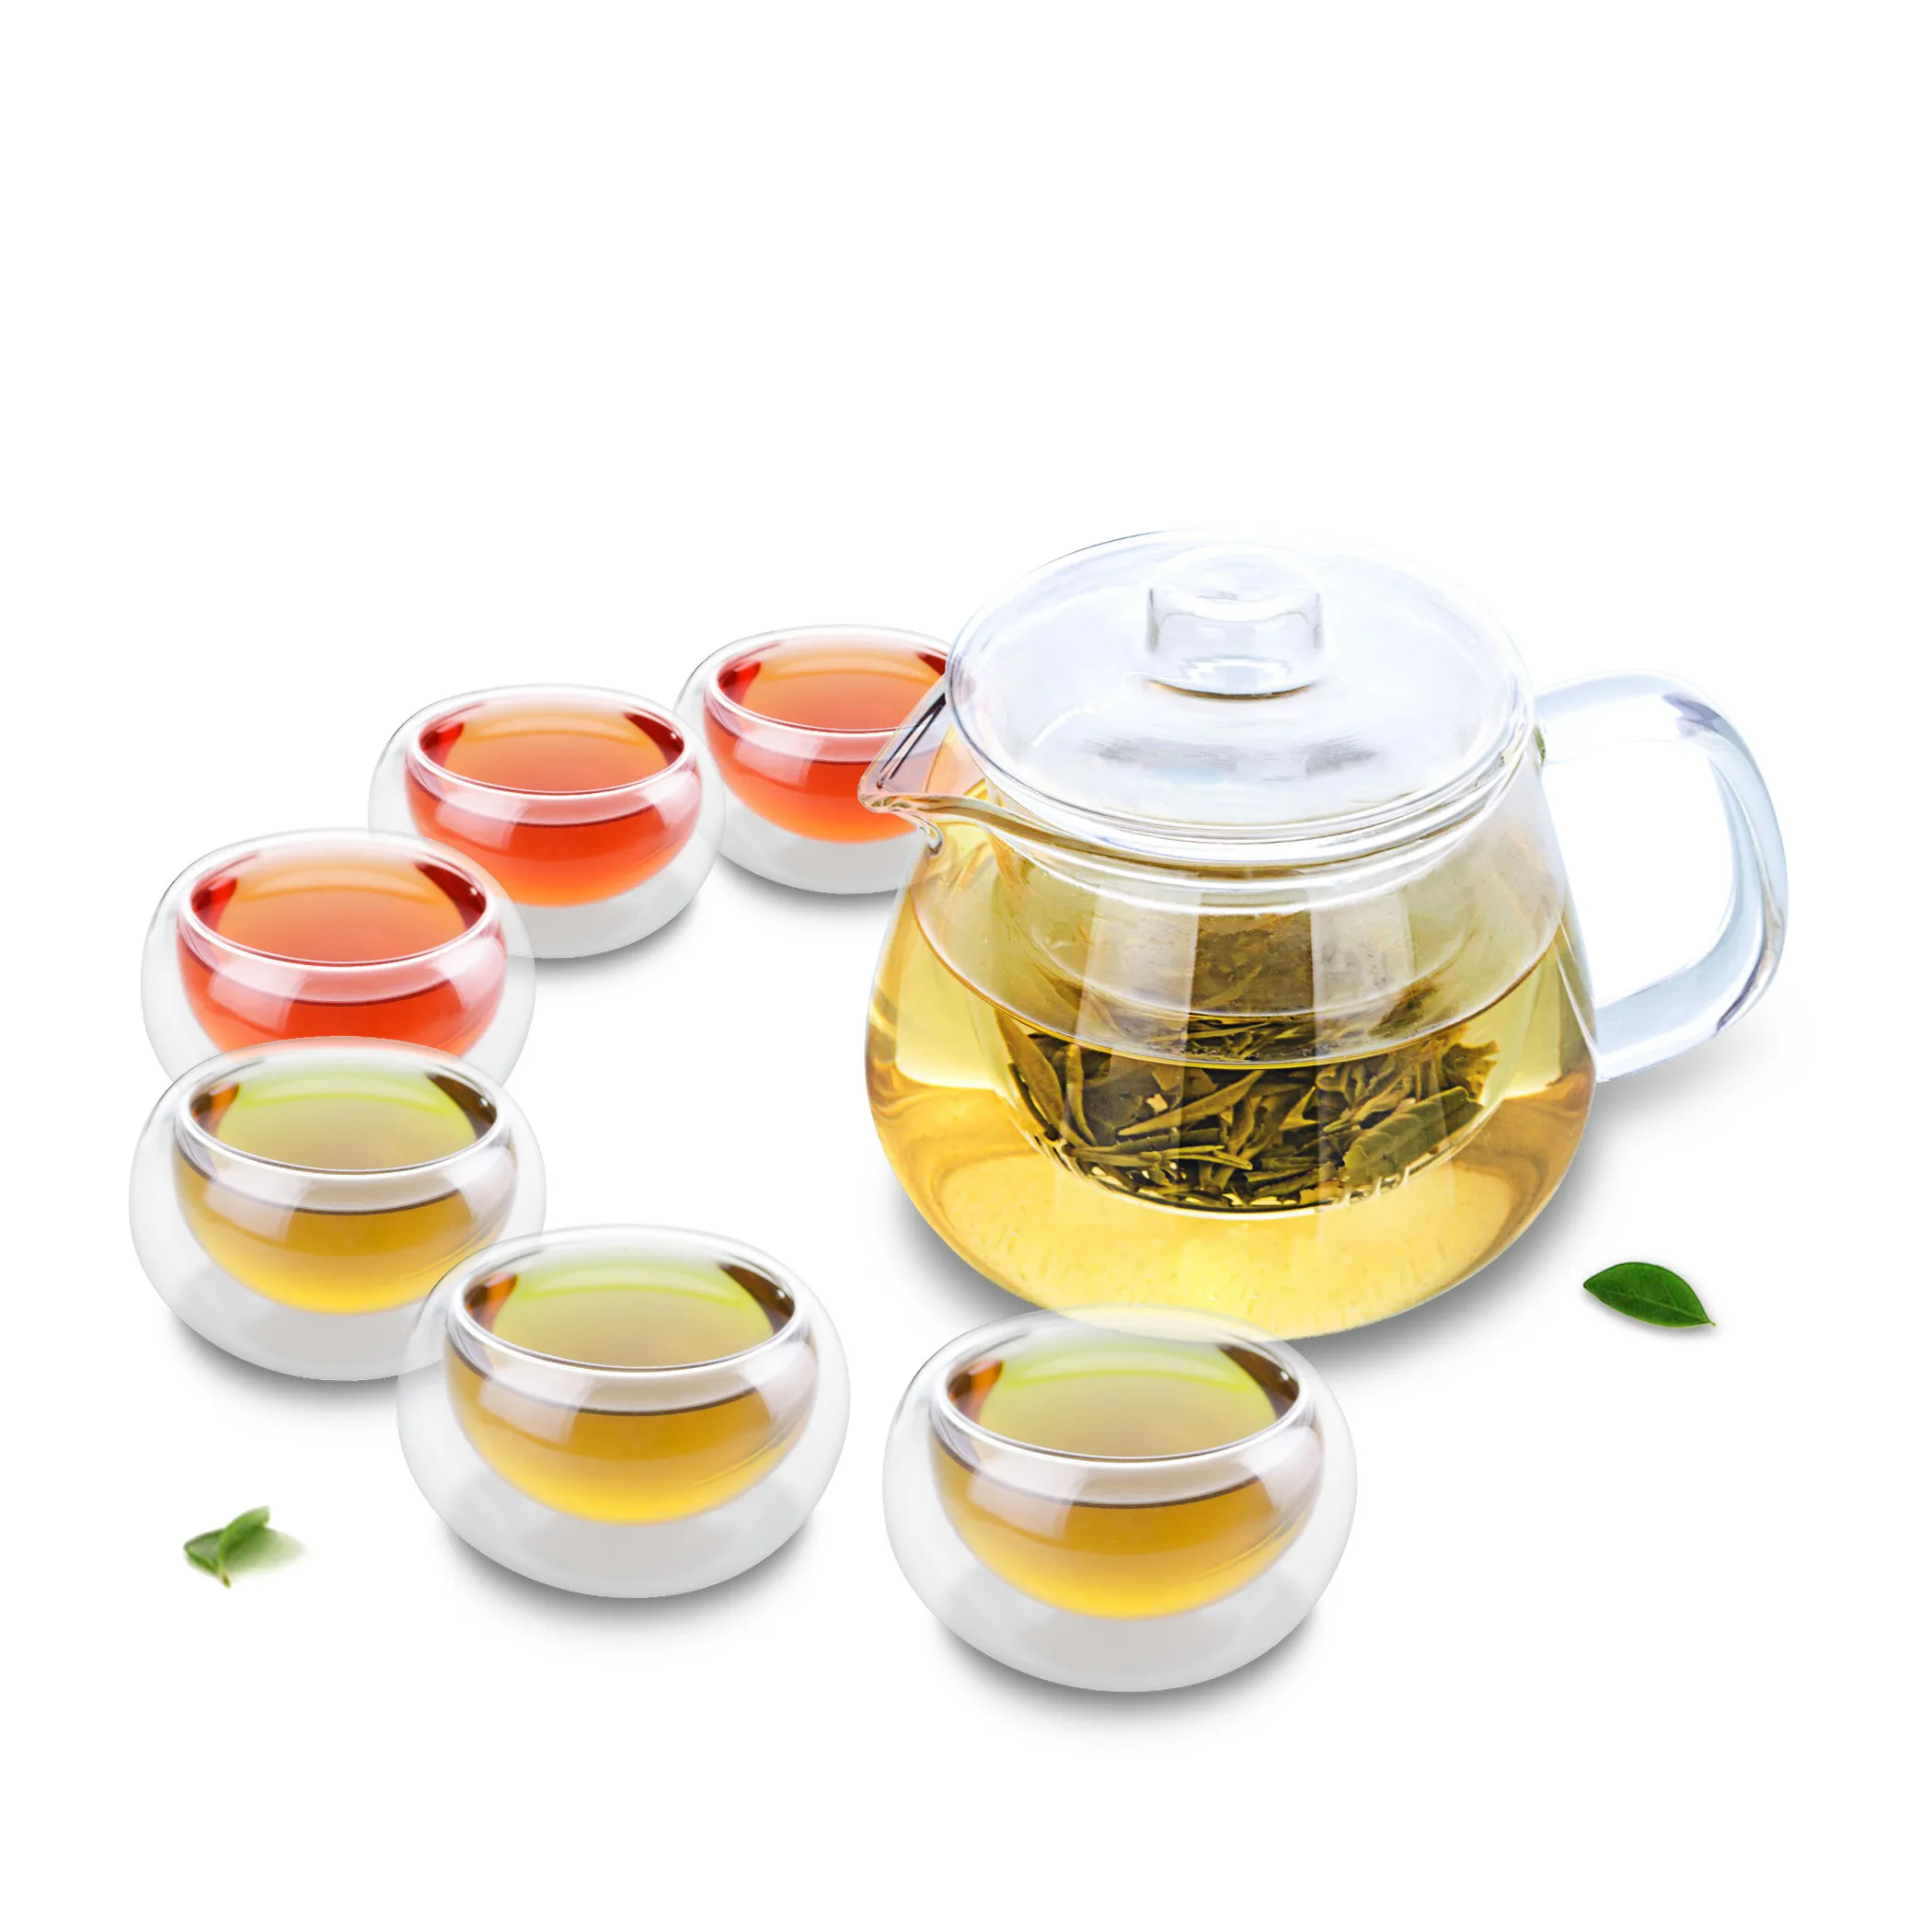 

1x 7in1 Kung fu Coffee Tea Set -485ml Heat-Resisting Glass Water Tea Pot with infuser +6* Small Tea Cups Mugs Set